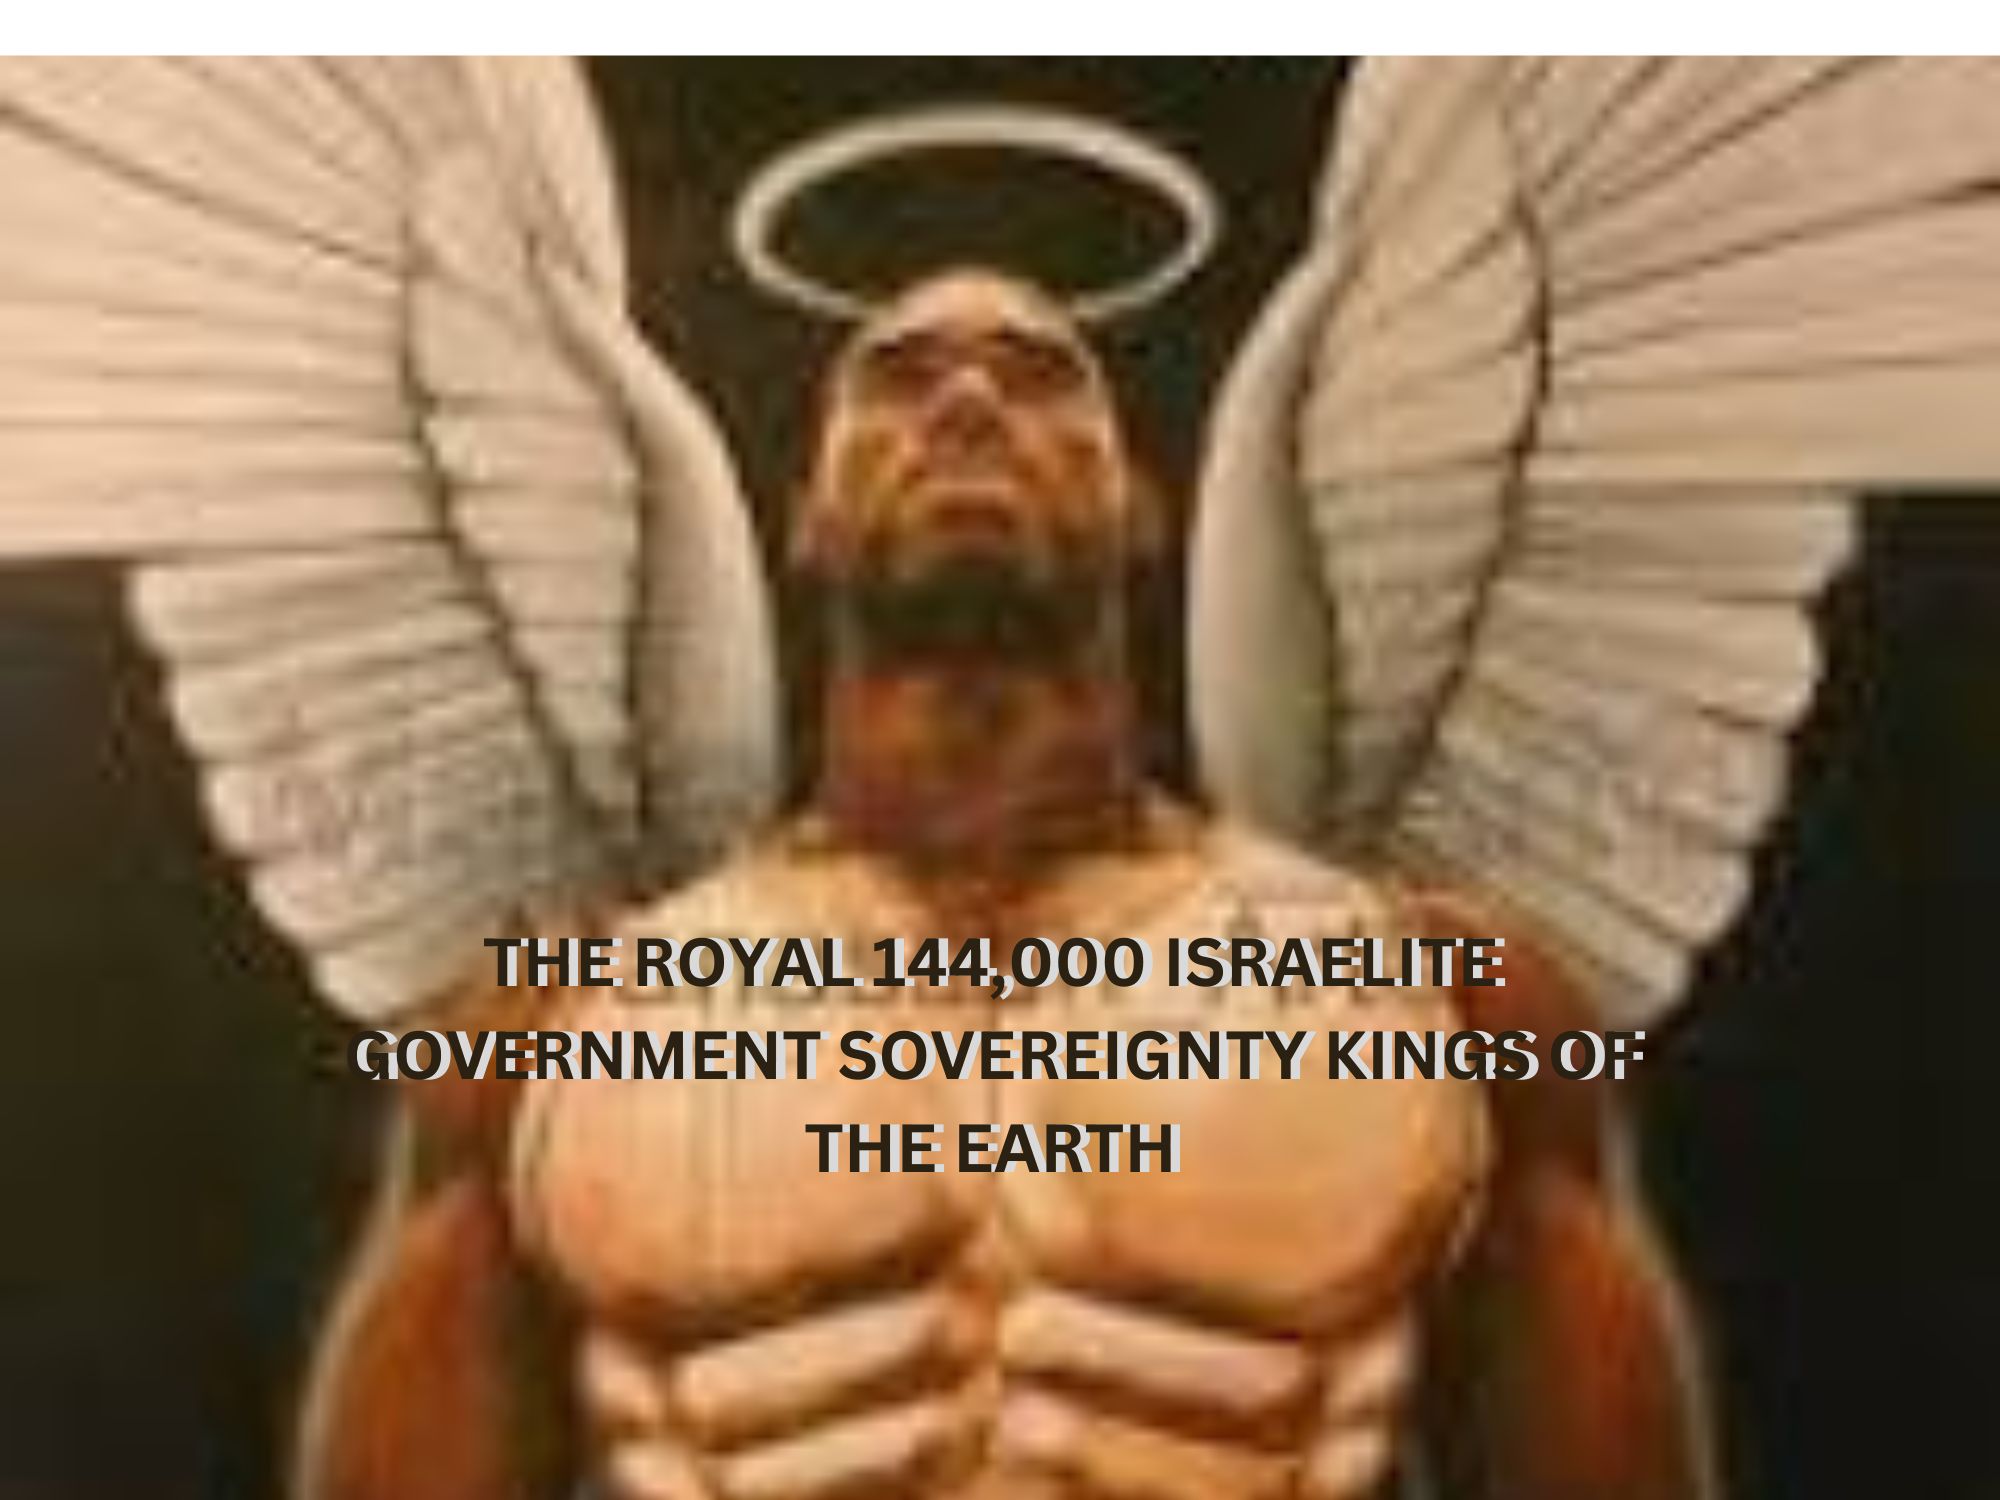 THE ISRAELITE GOVERNMENT 144,000 AMBASSADORS OF CHRIST